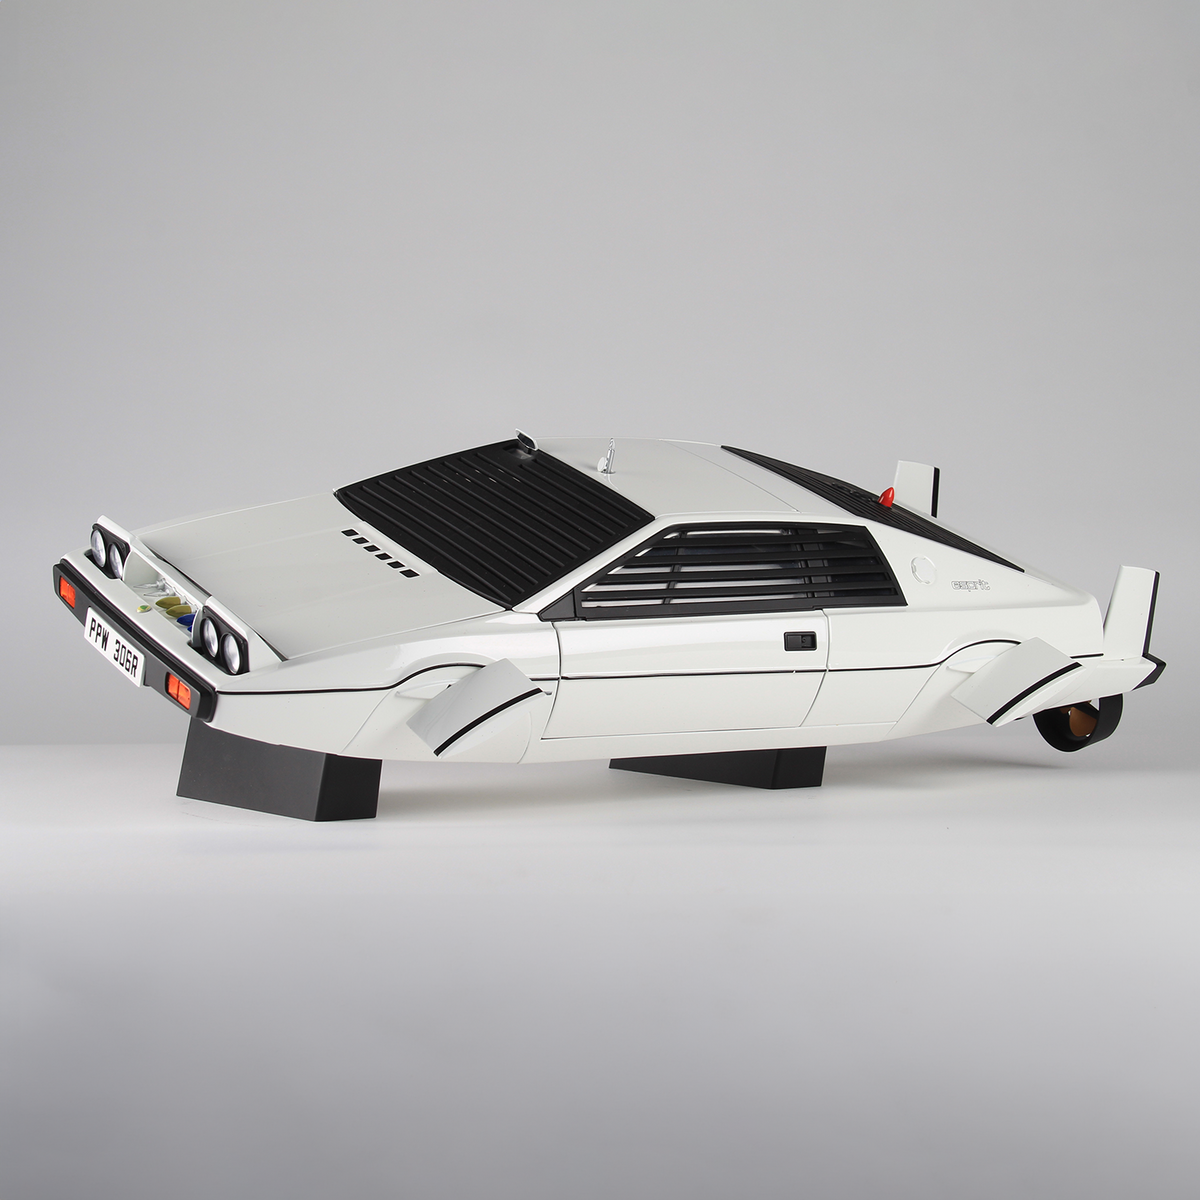 James Bond The Spy Who Loved Me Lotus Esprit Model Car Kit - Subscription - By Agora Models